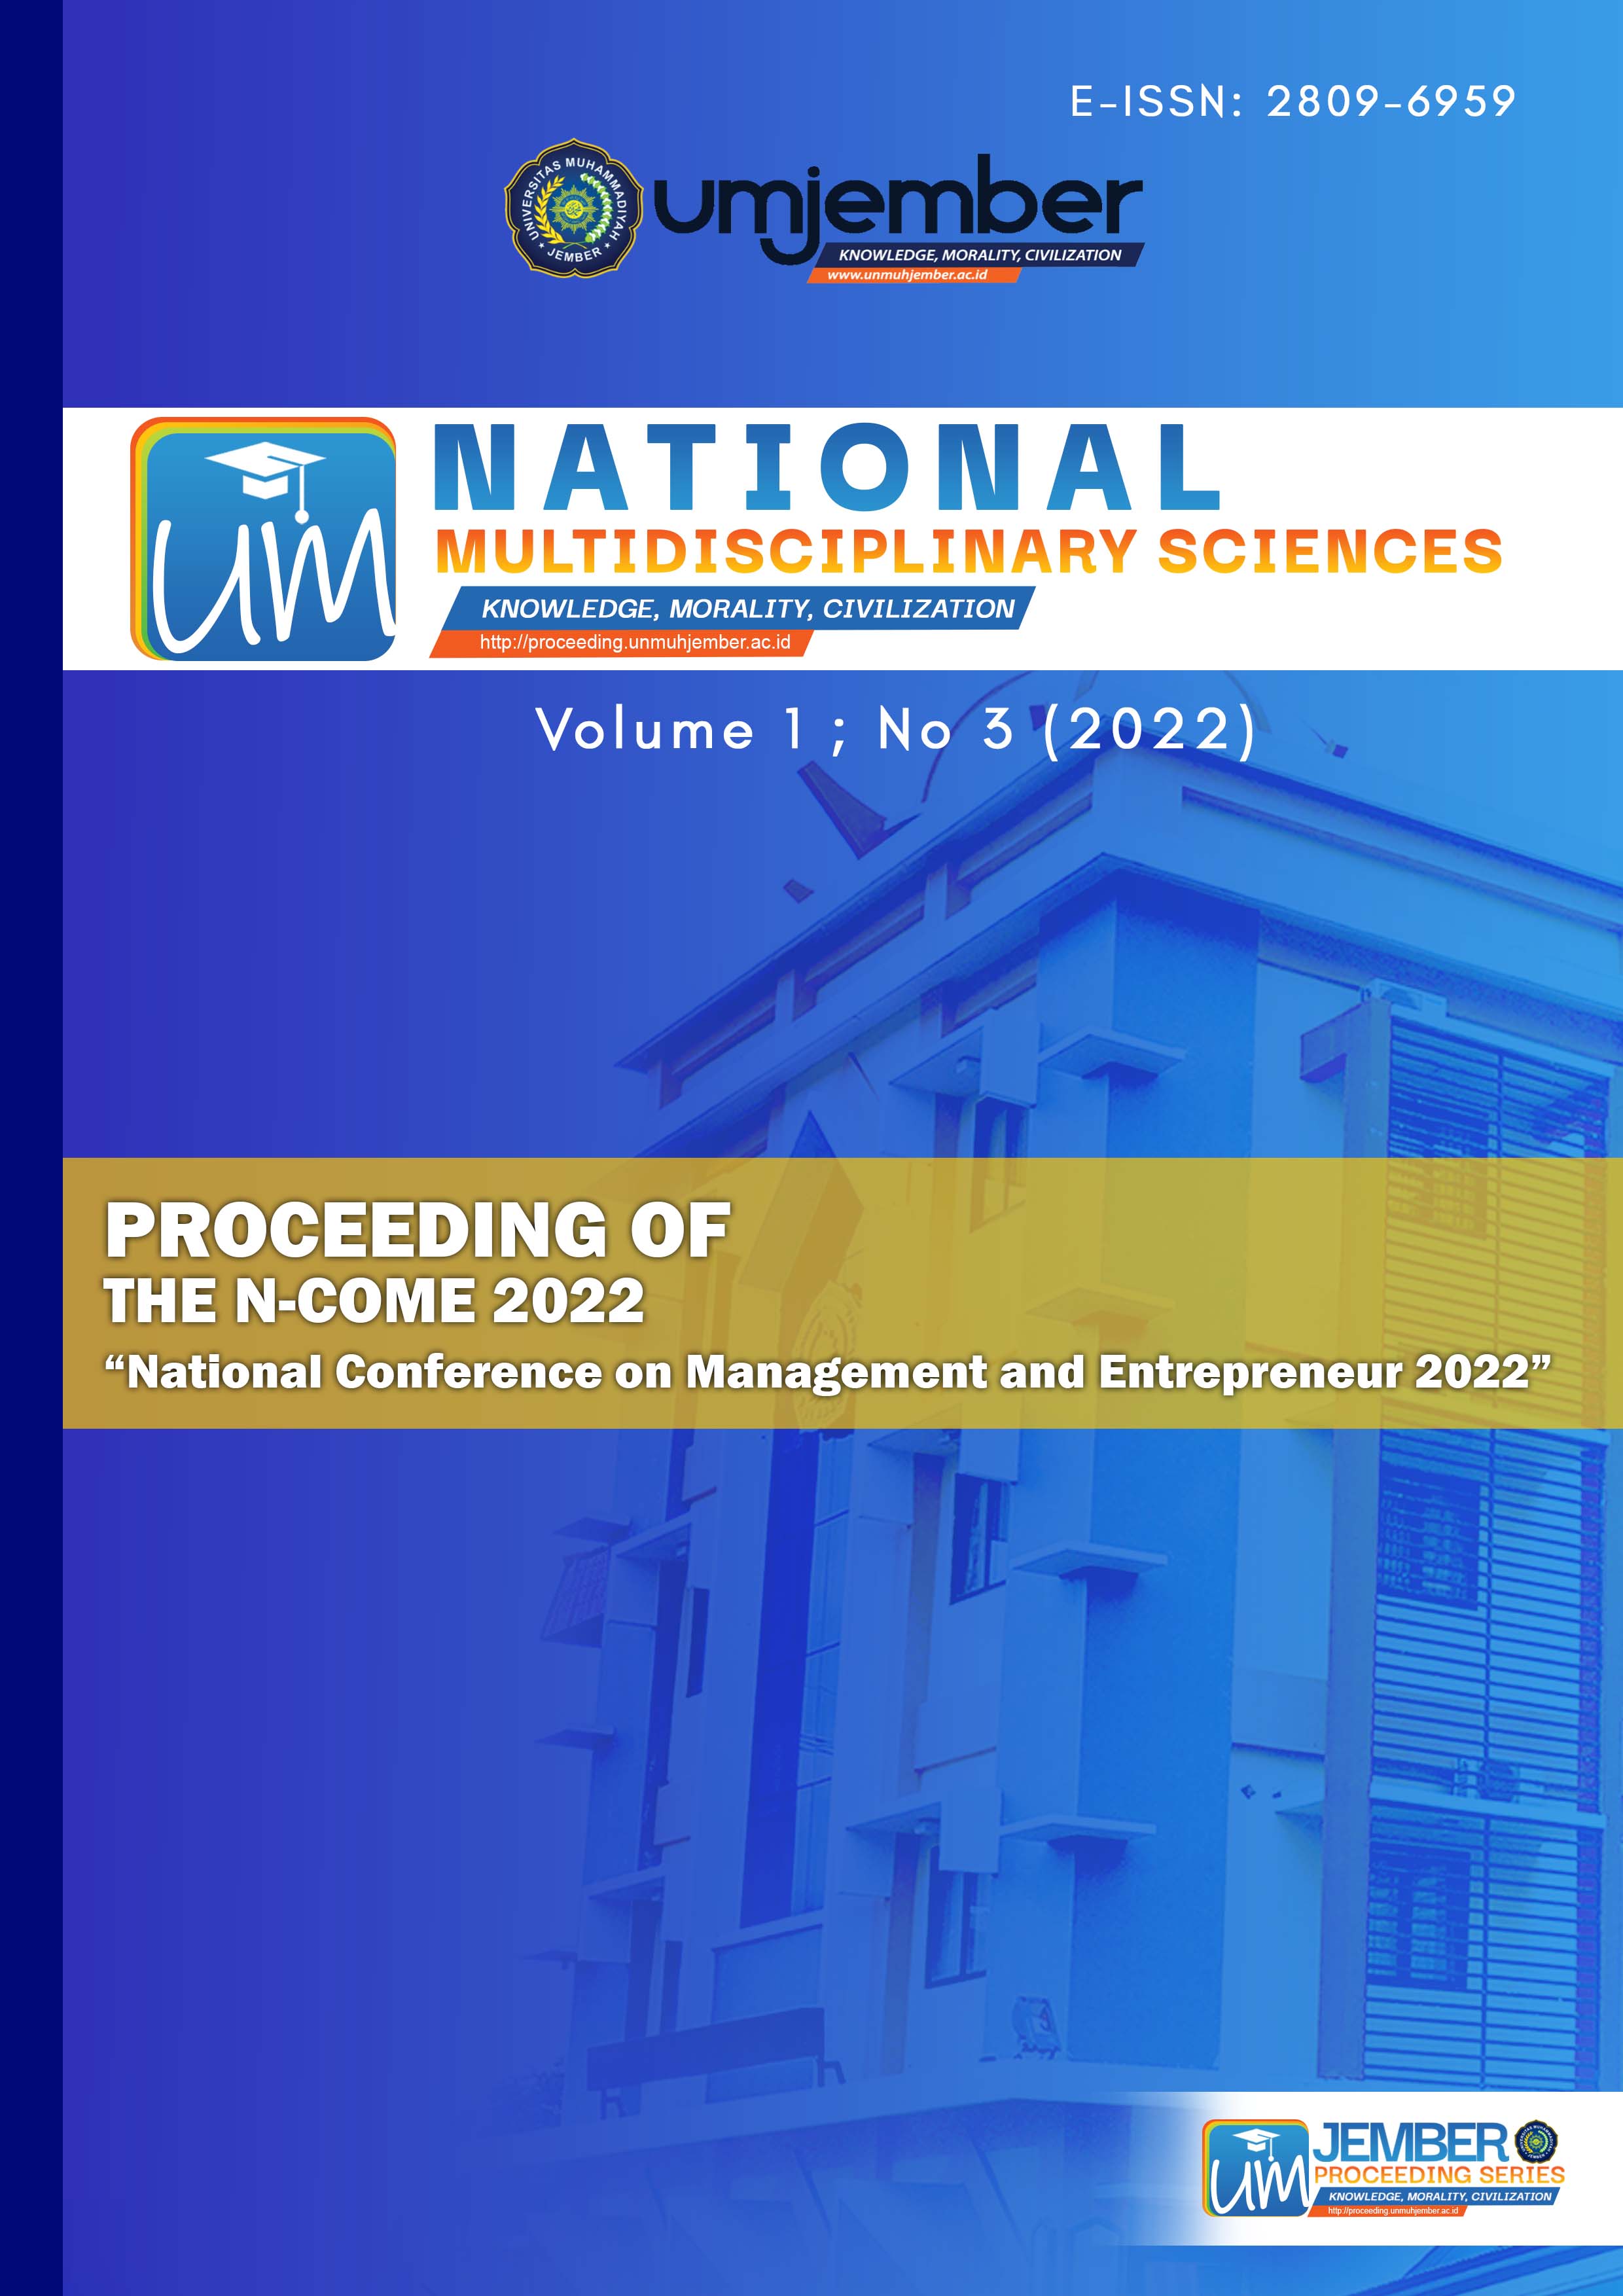 					View Vol. 1 No. 3 (2022): Proceedings N-CoME 2022
				